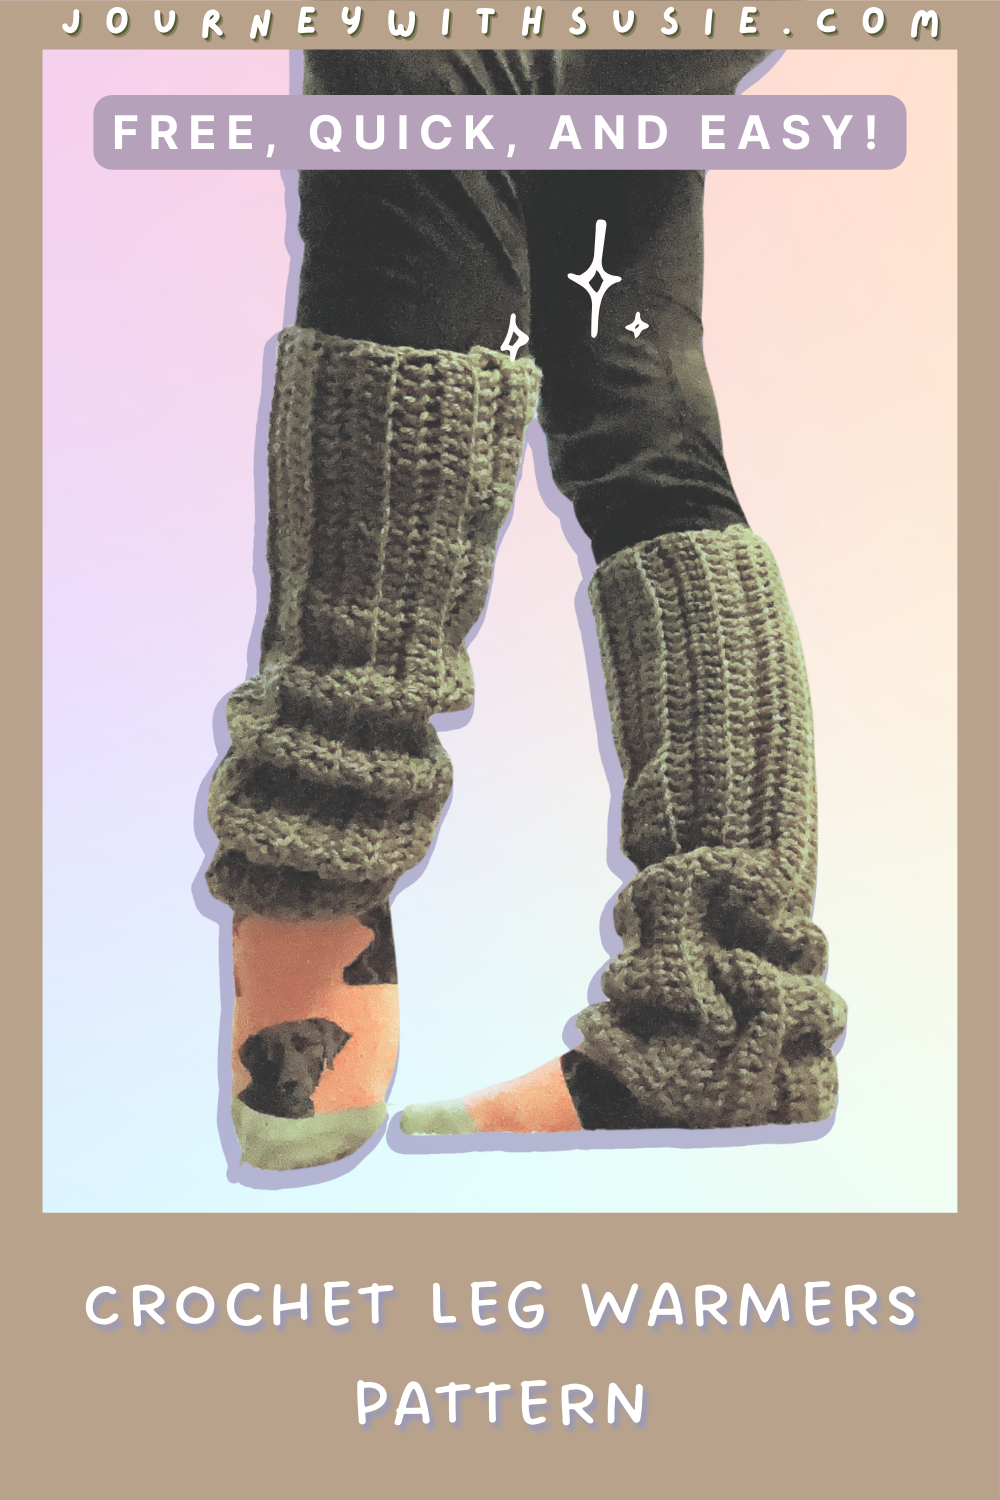 Crochet Leg Warmers Pattern - journey with Susie